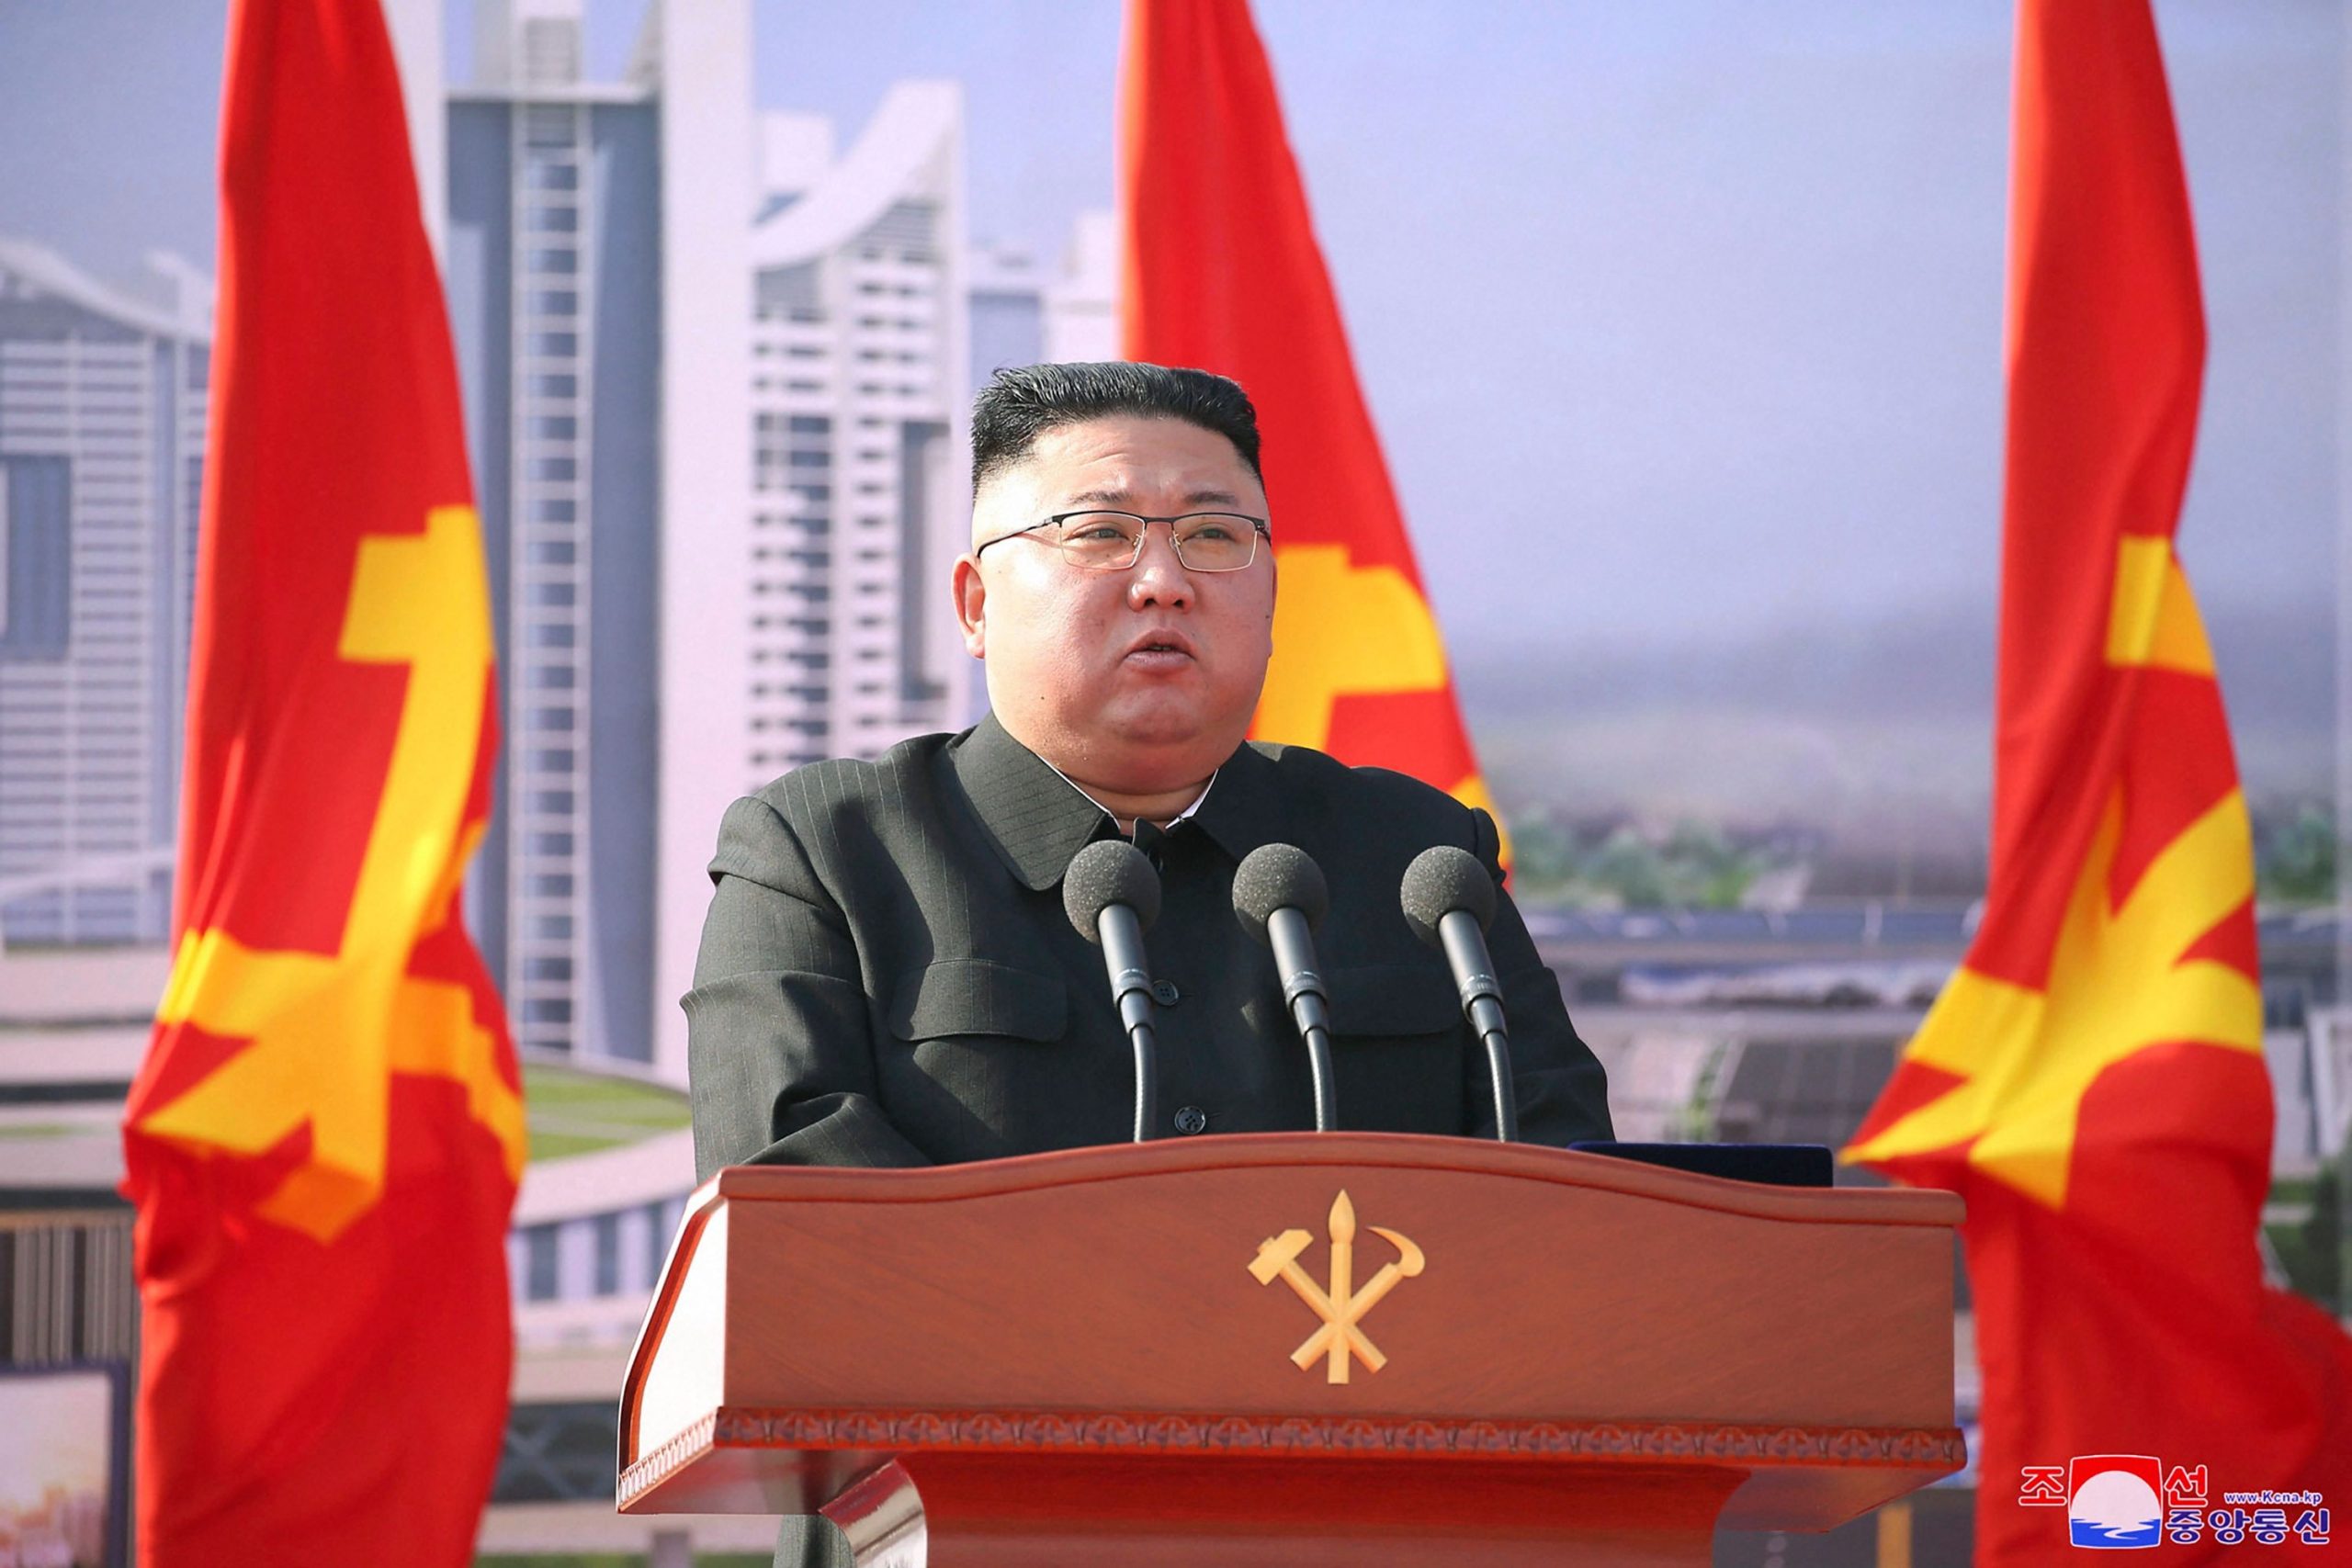 Kim Jong Un admits food situation ‘tense’ in North Korea